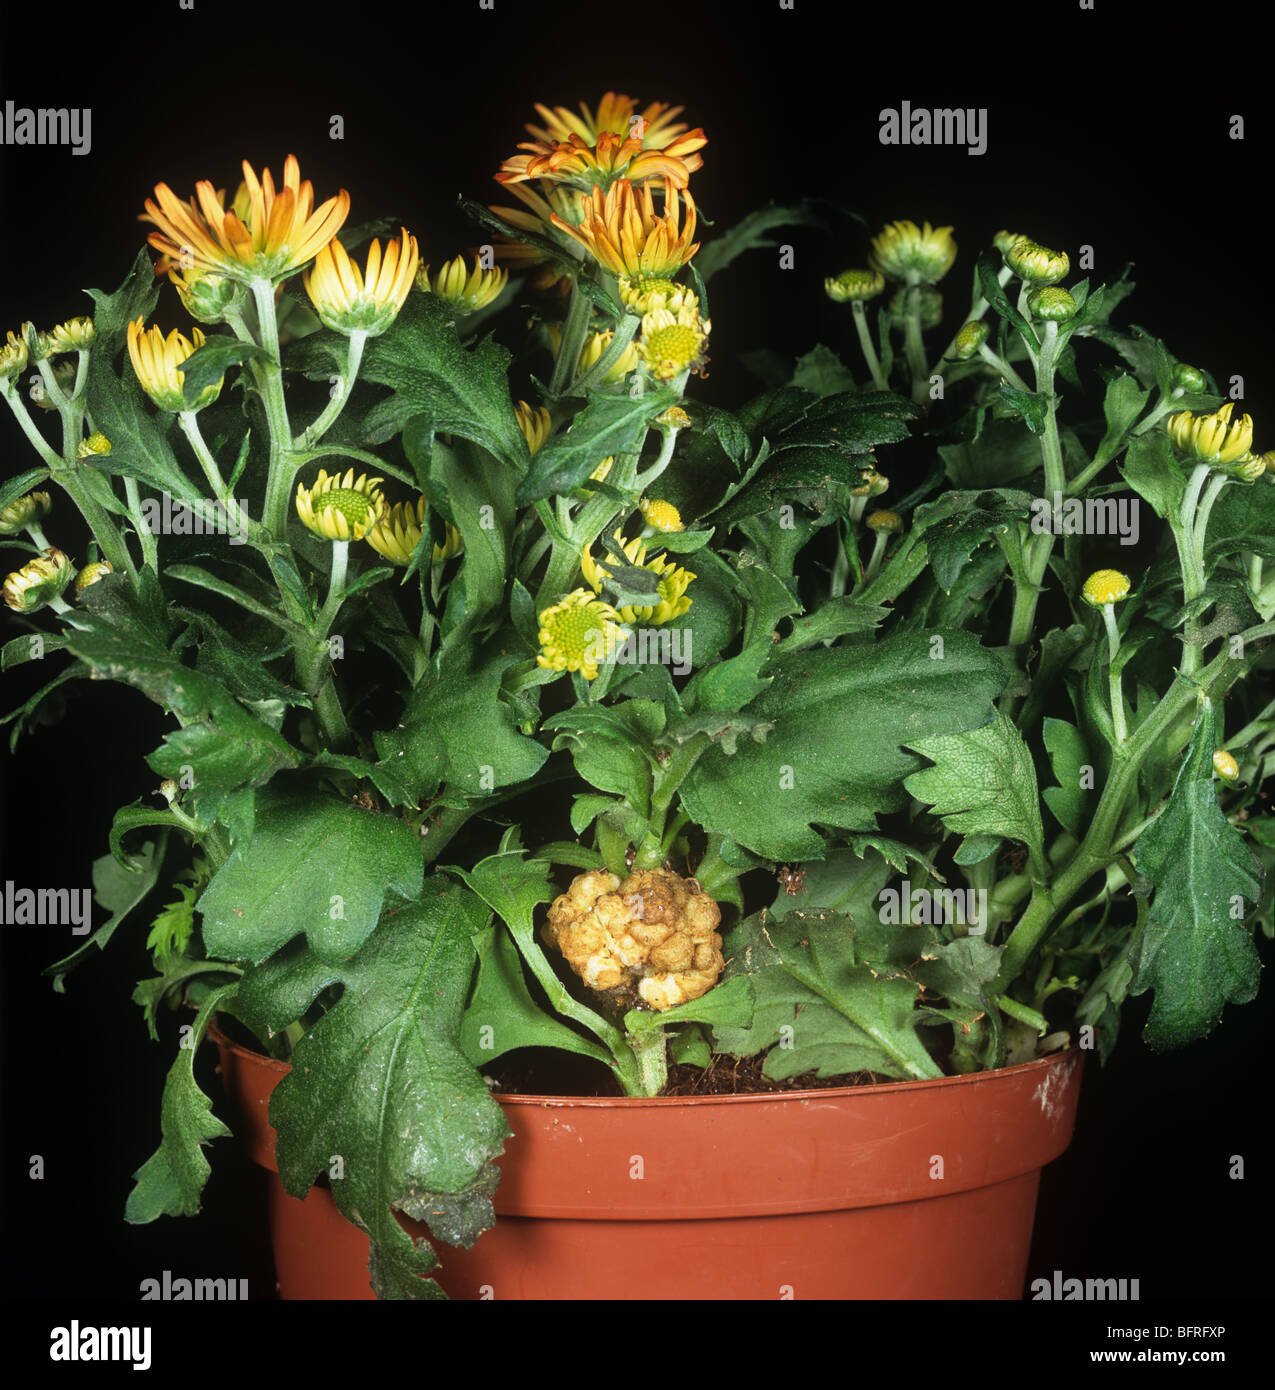 Crown gall (Rhizobium radioobacter) on Chrysanthemum plant Stock Photo